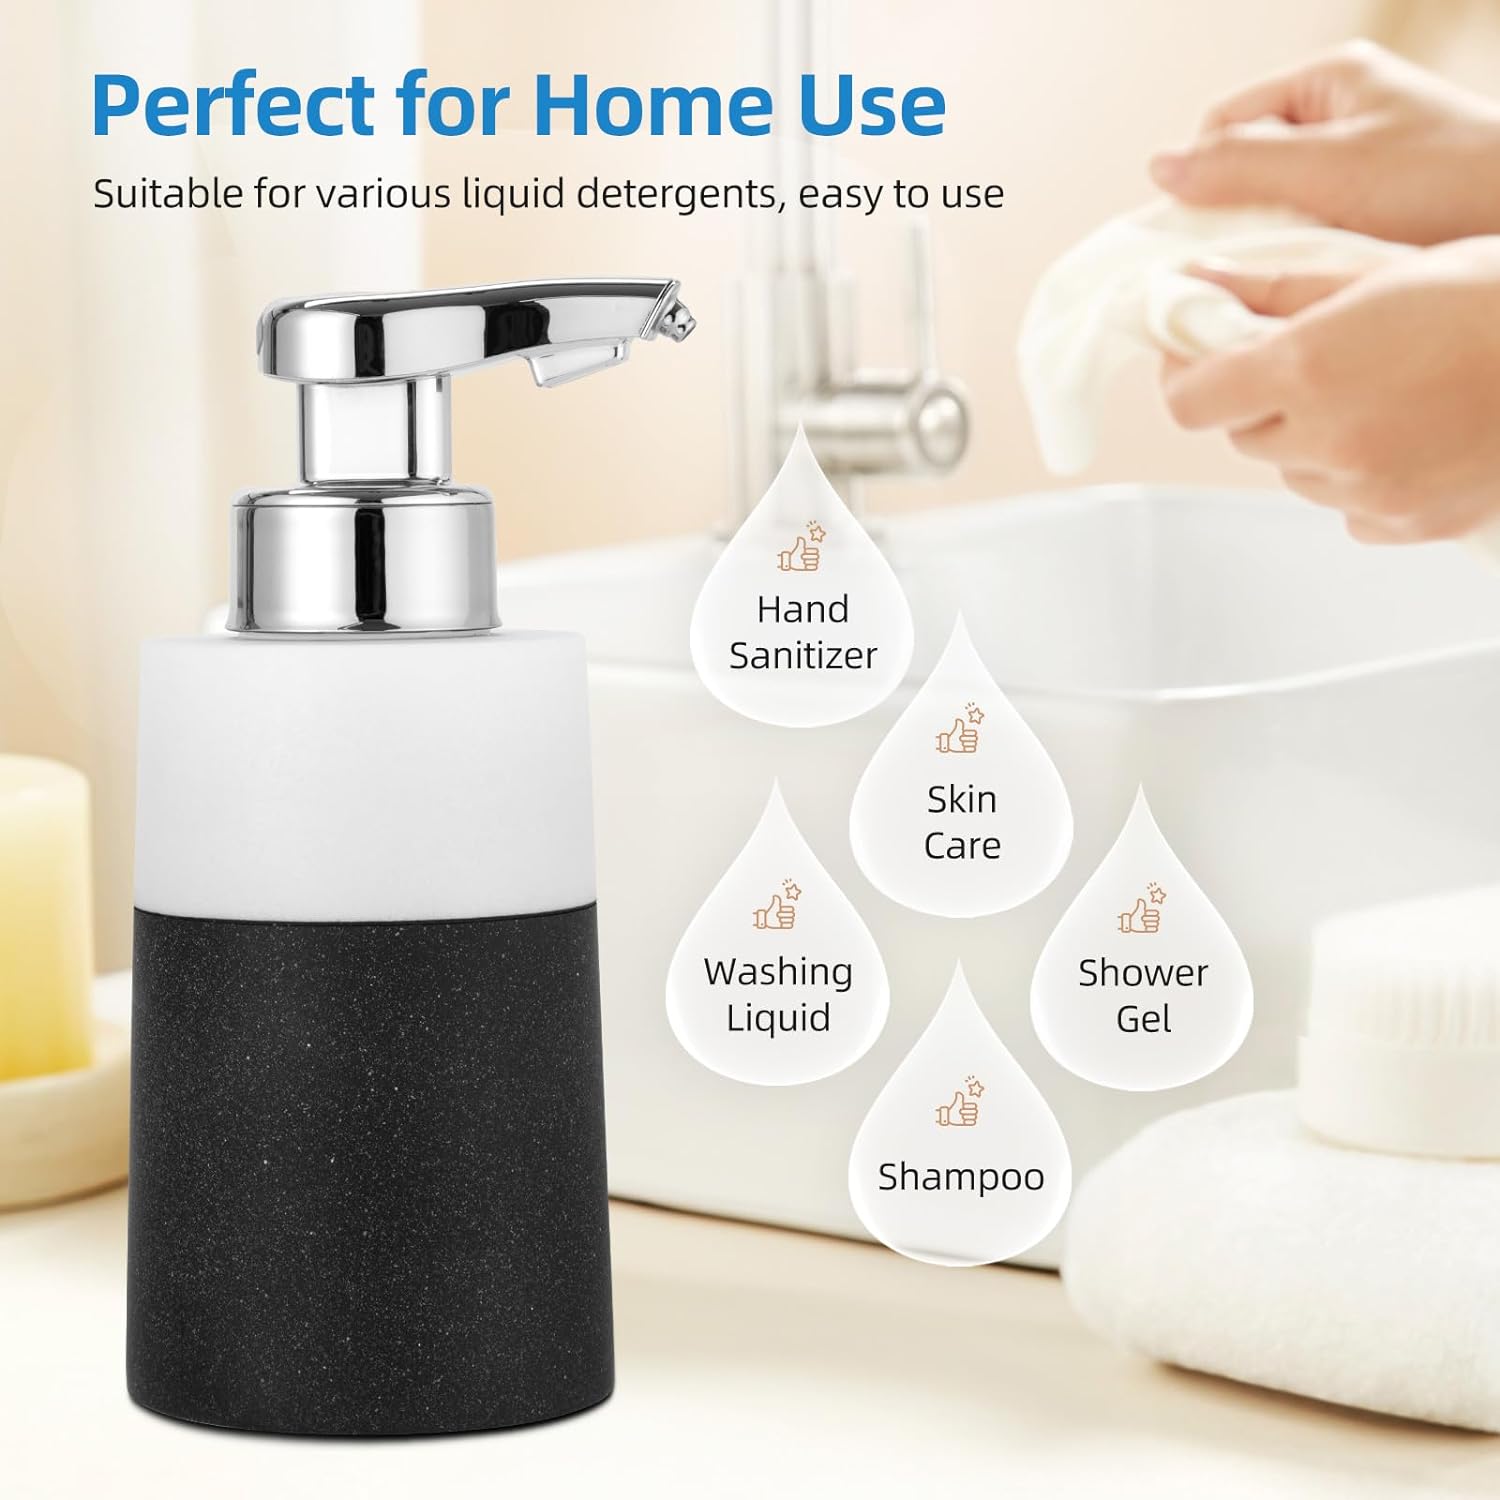 Automatic Soap Dispenser Touchless: 10oz Foaming Soap Dispenser, Hand Free Soap Dispenser Rechargeable Soap Dispenser, for Bathroom, Kitchen, Hotel